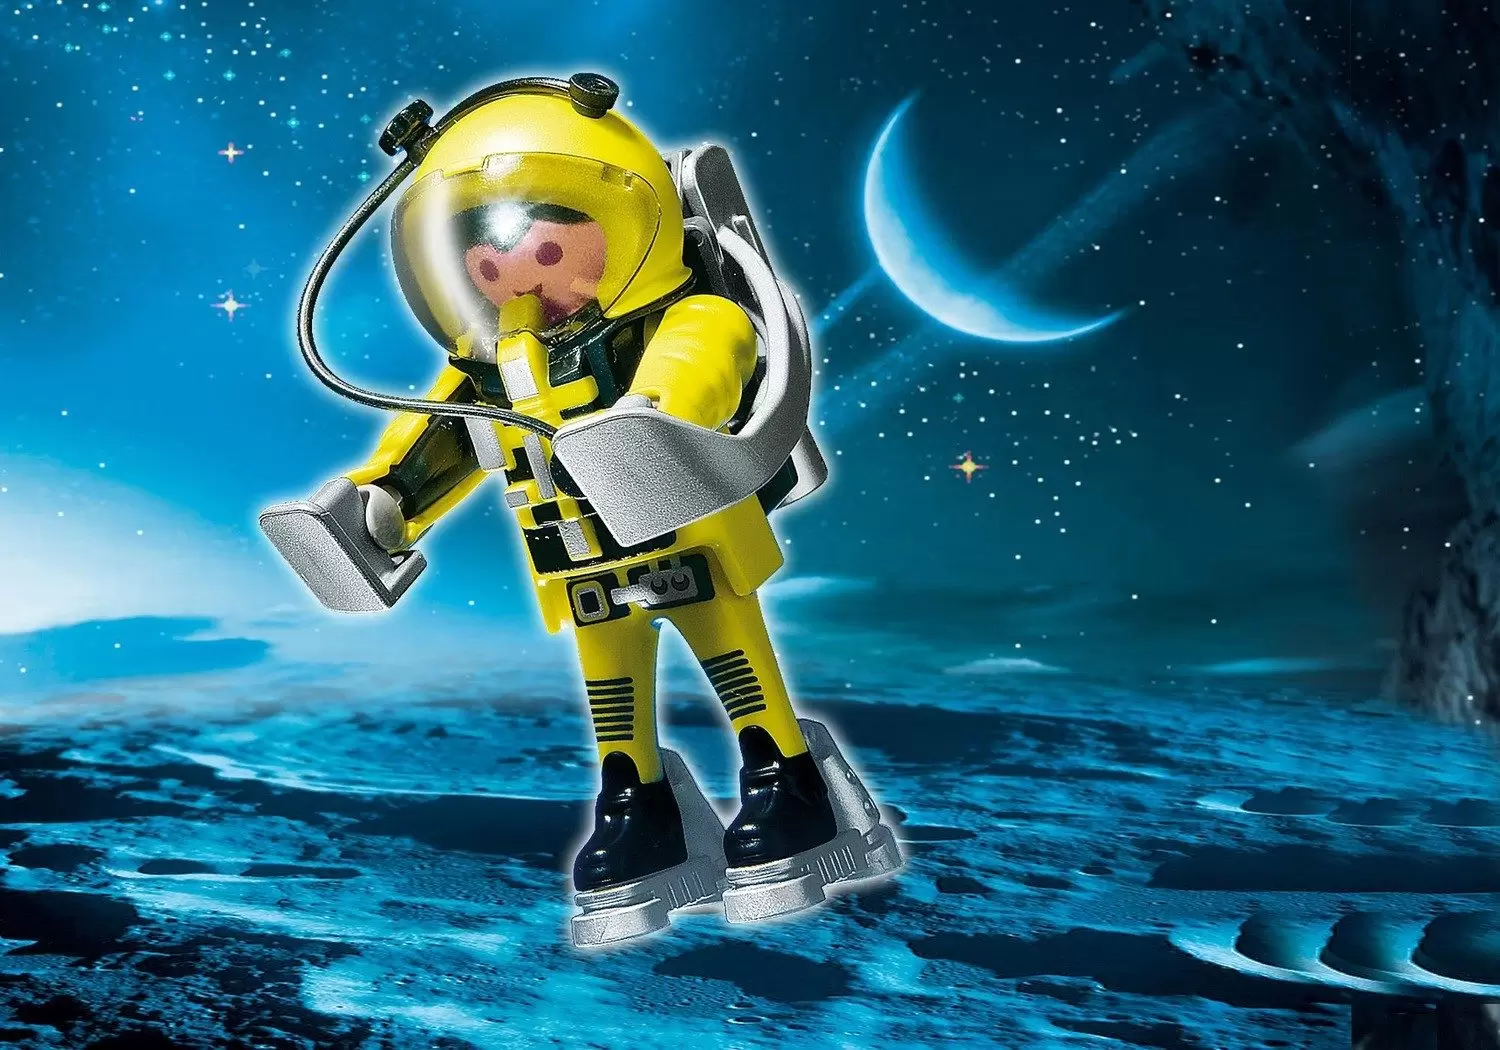 Playmobil Special - Yellow astronaut